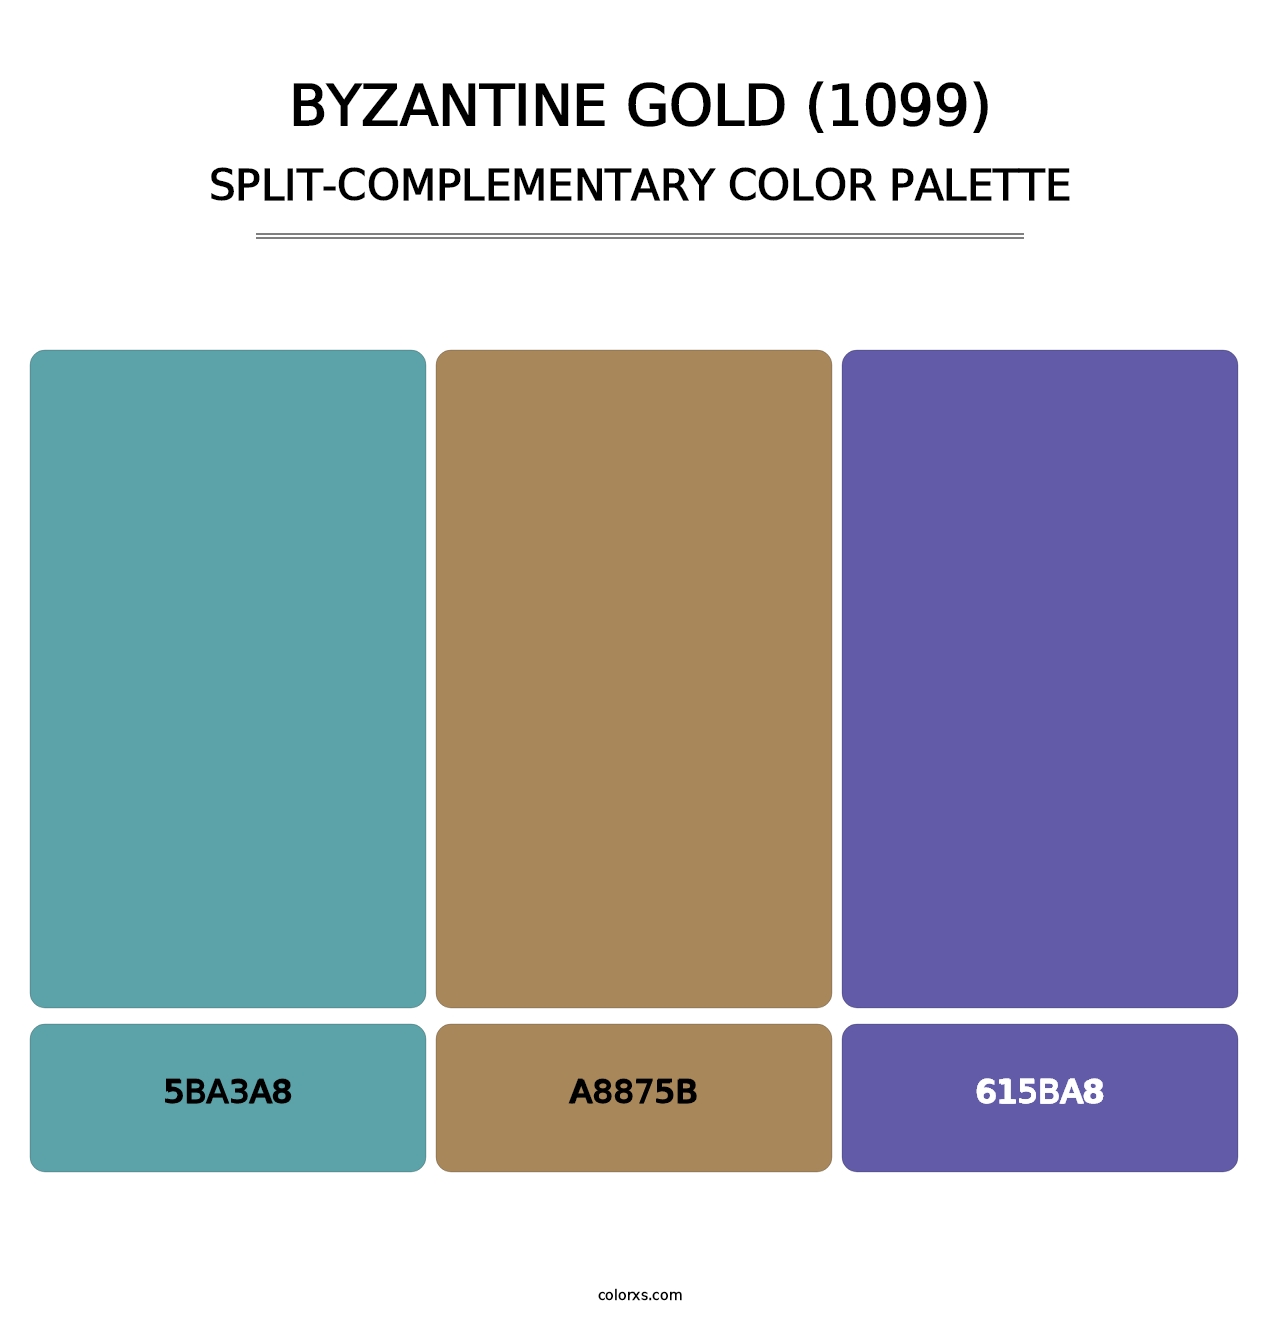 Byzantine Gold (1099) - Split-Complementary Color Palette